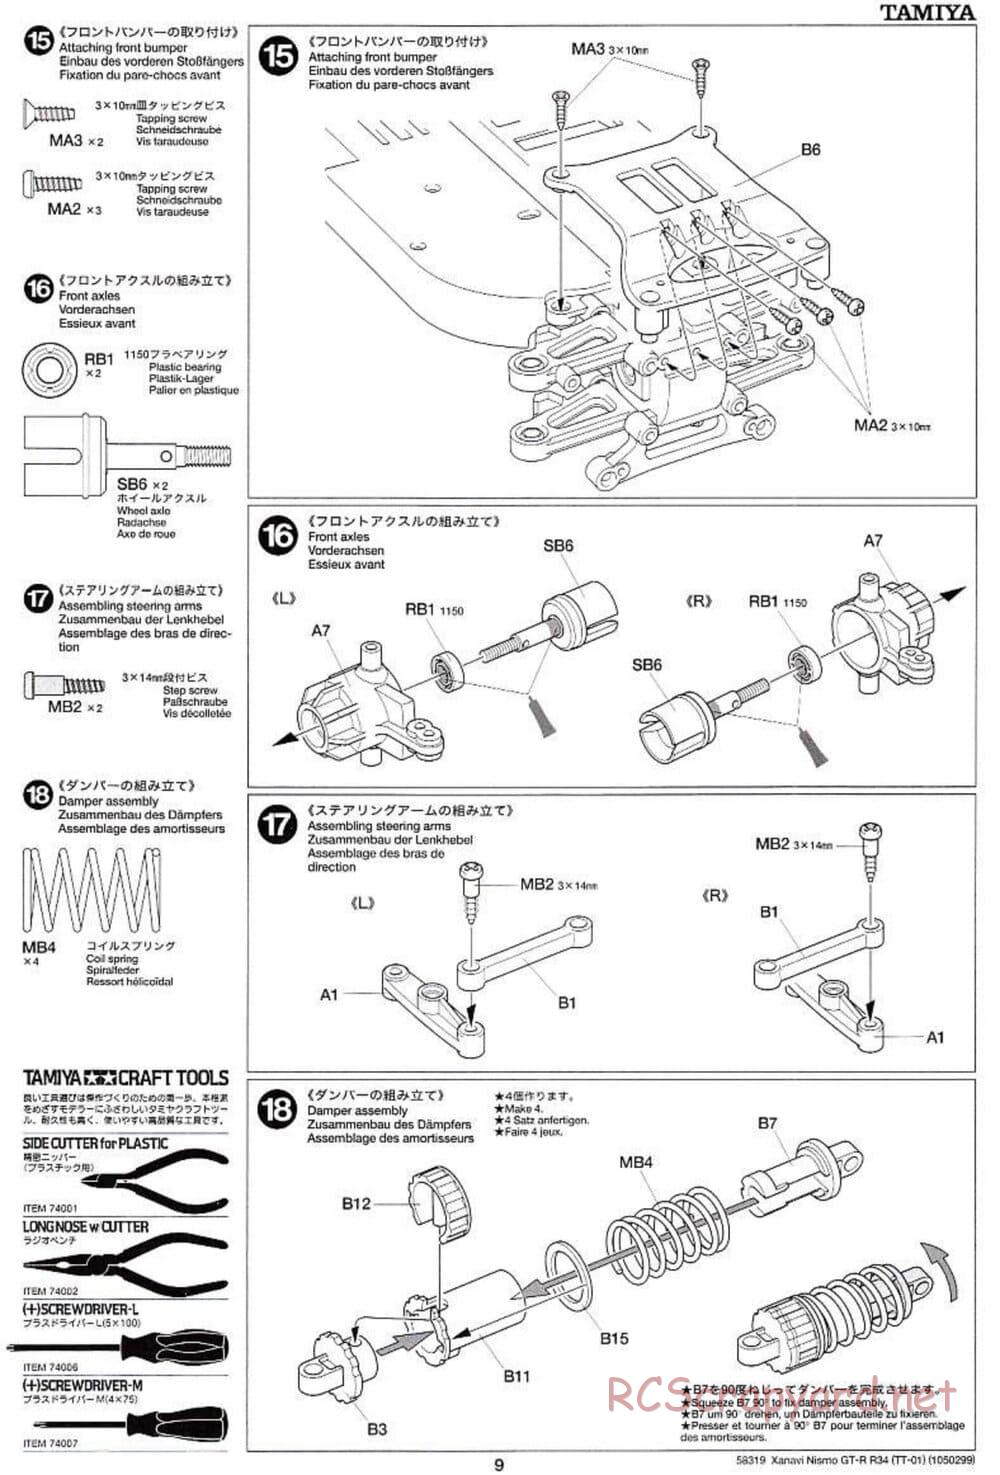 Tamiya - Xanavi Nismo GT-R R34 - TT-01 Chassis - Manual - Page 9